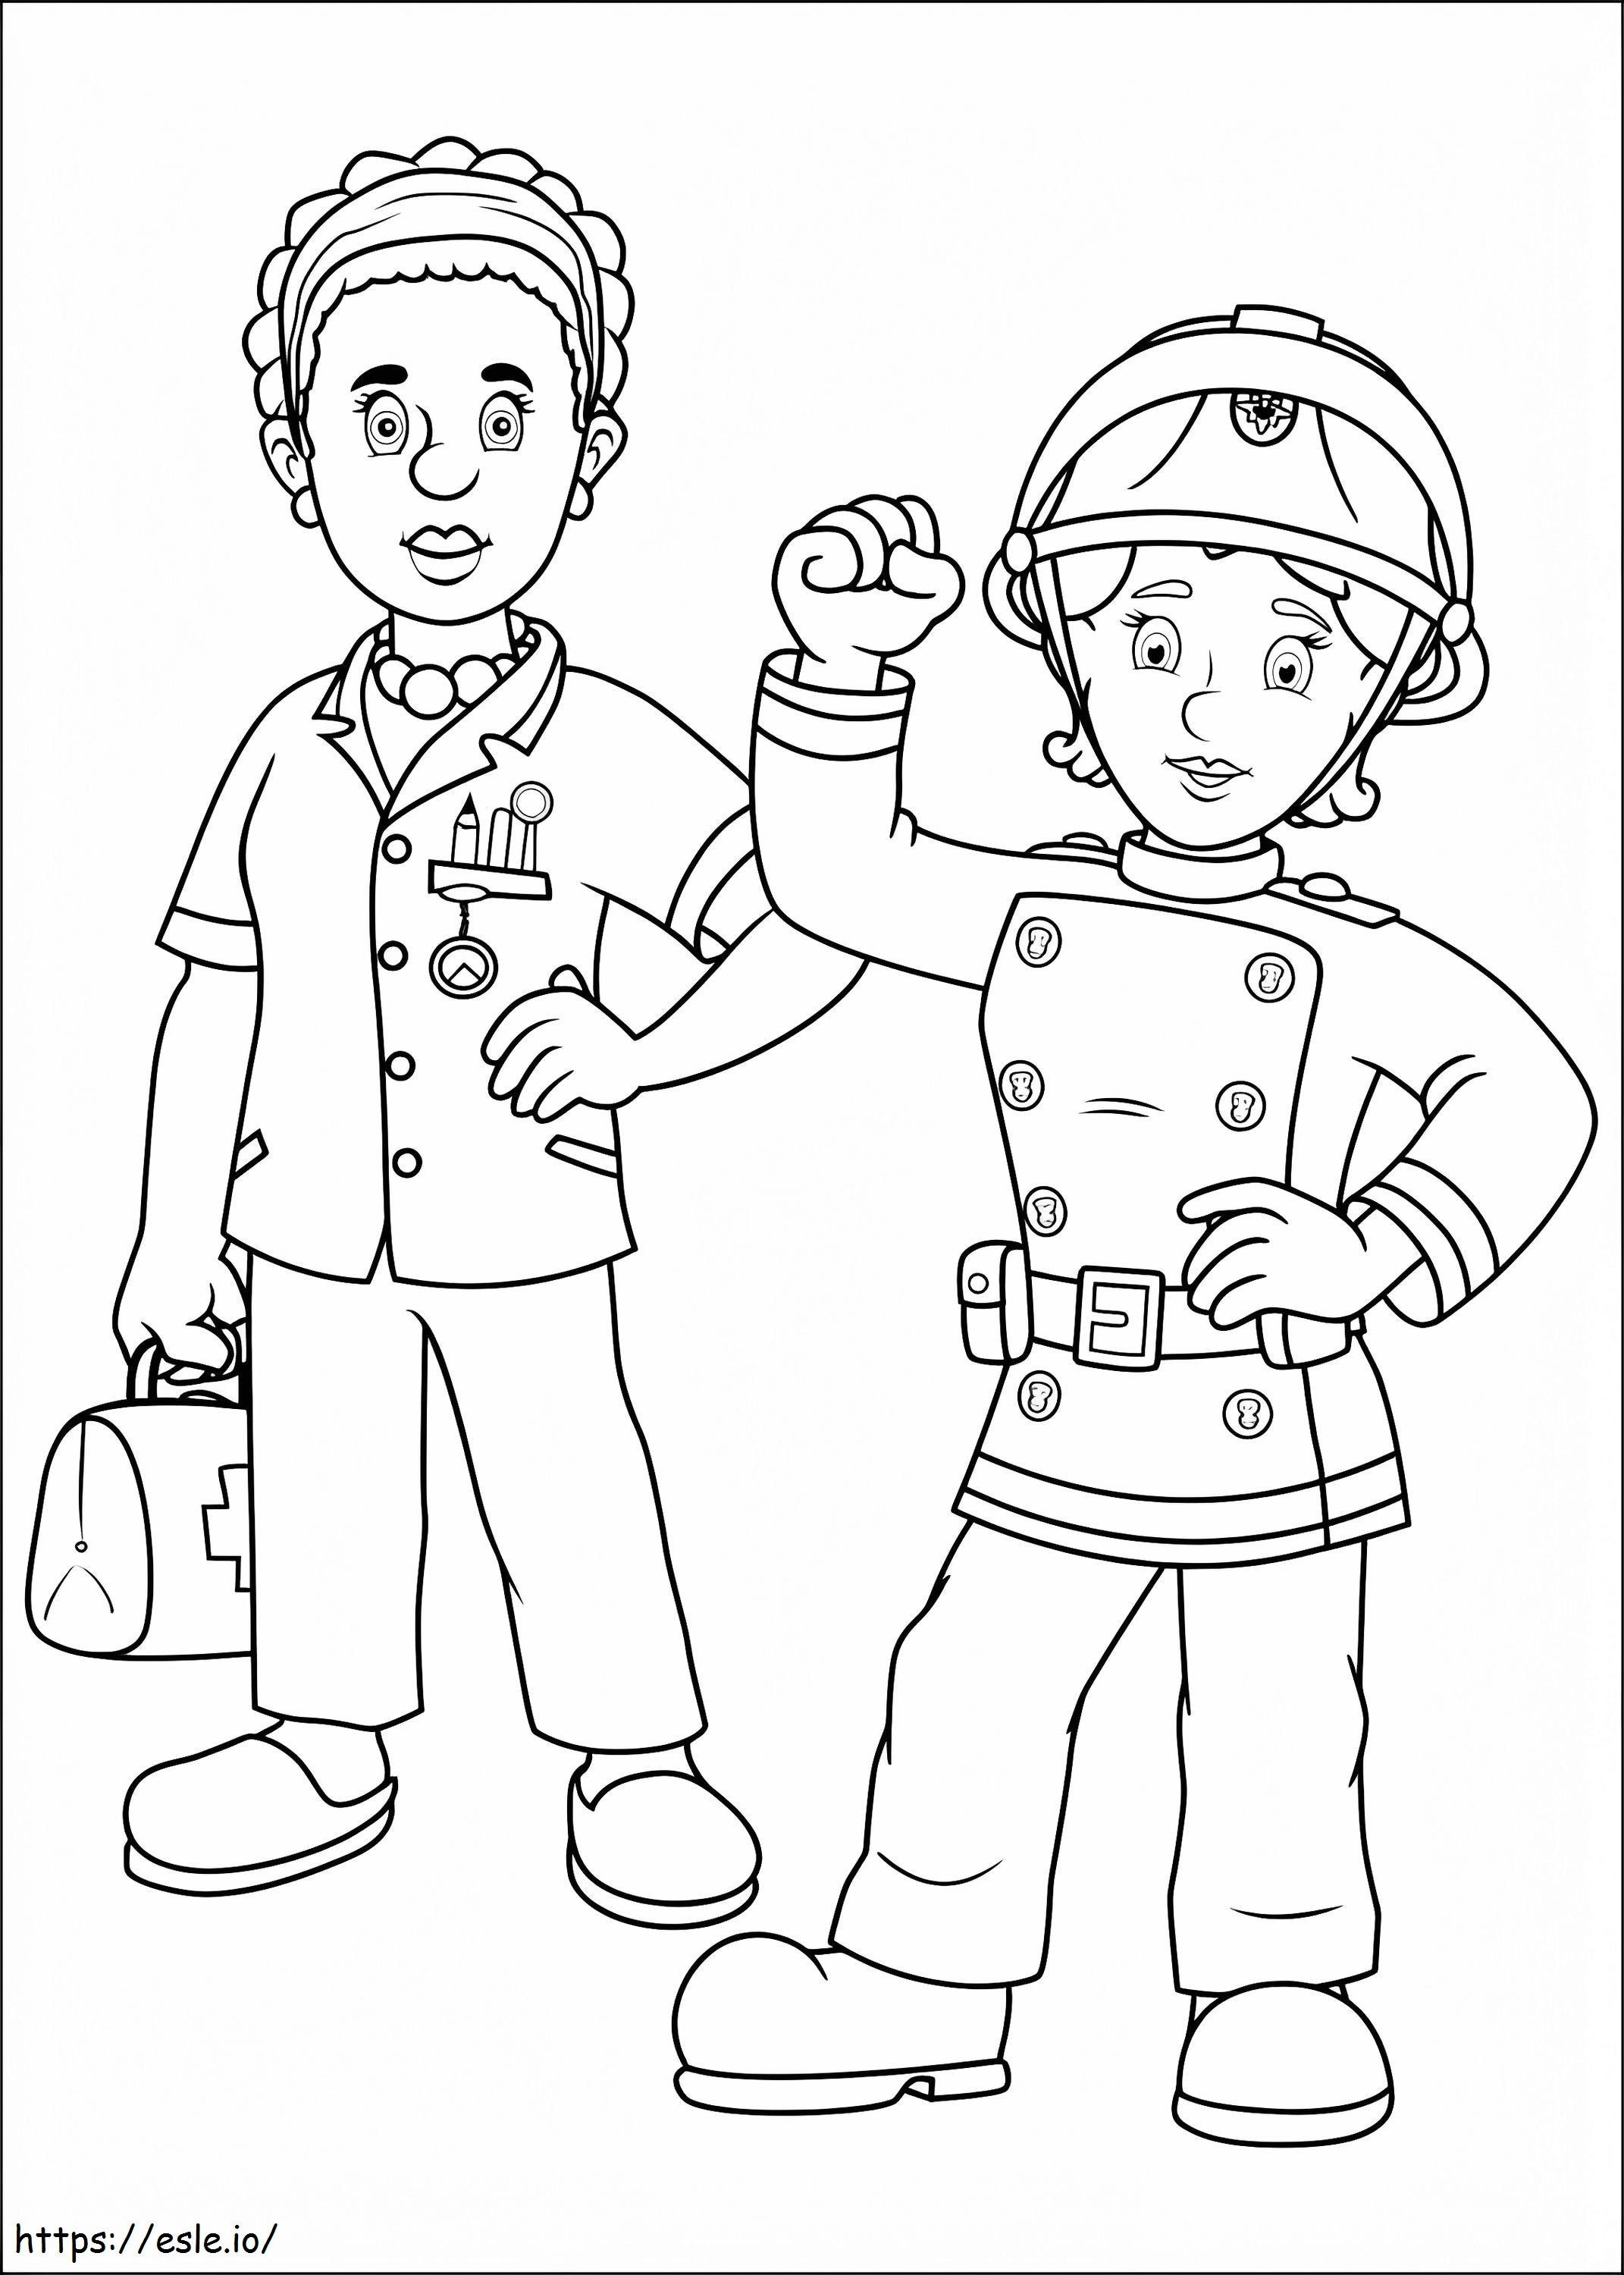 Fireman Sam Characters 2 coloring page